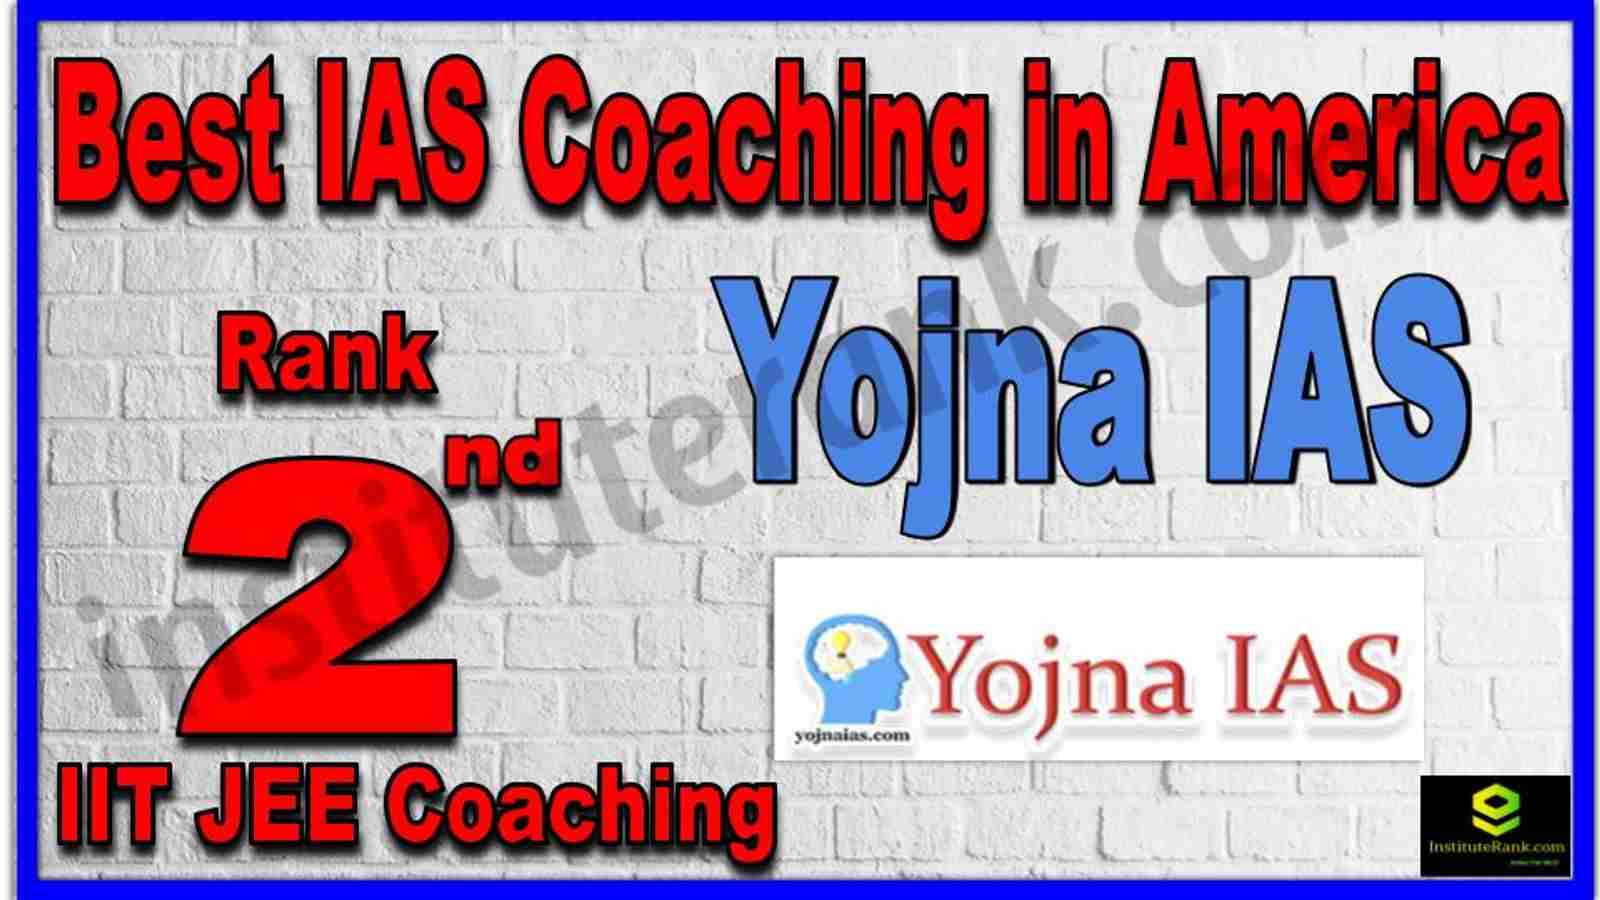 Rank 2nd Best IAS Coaching in America